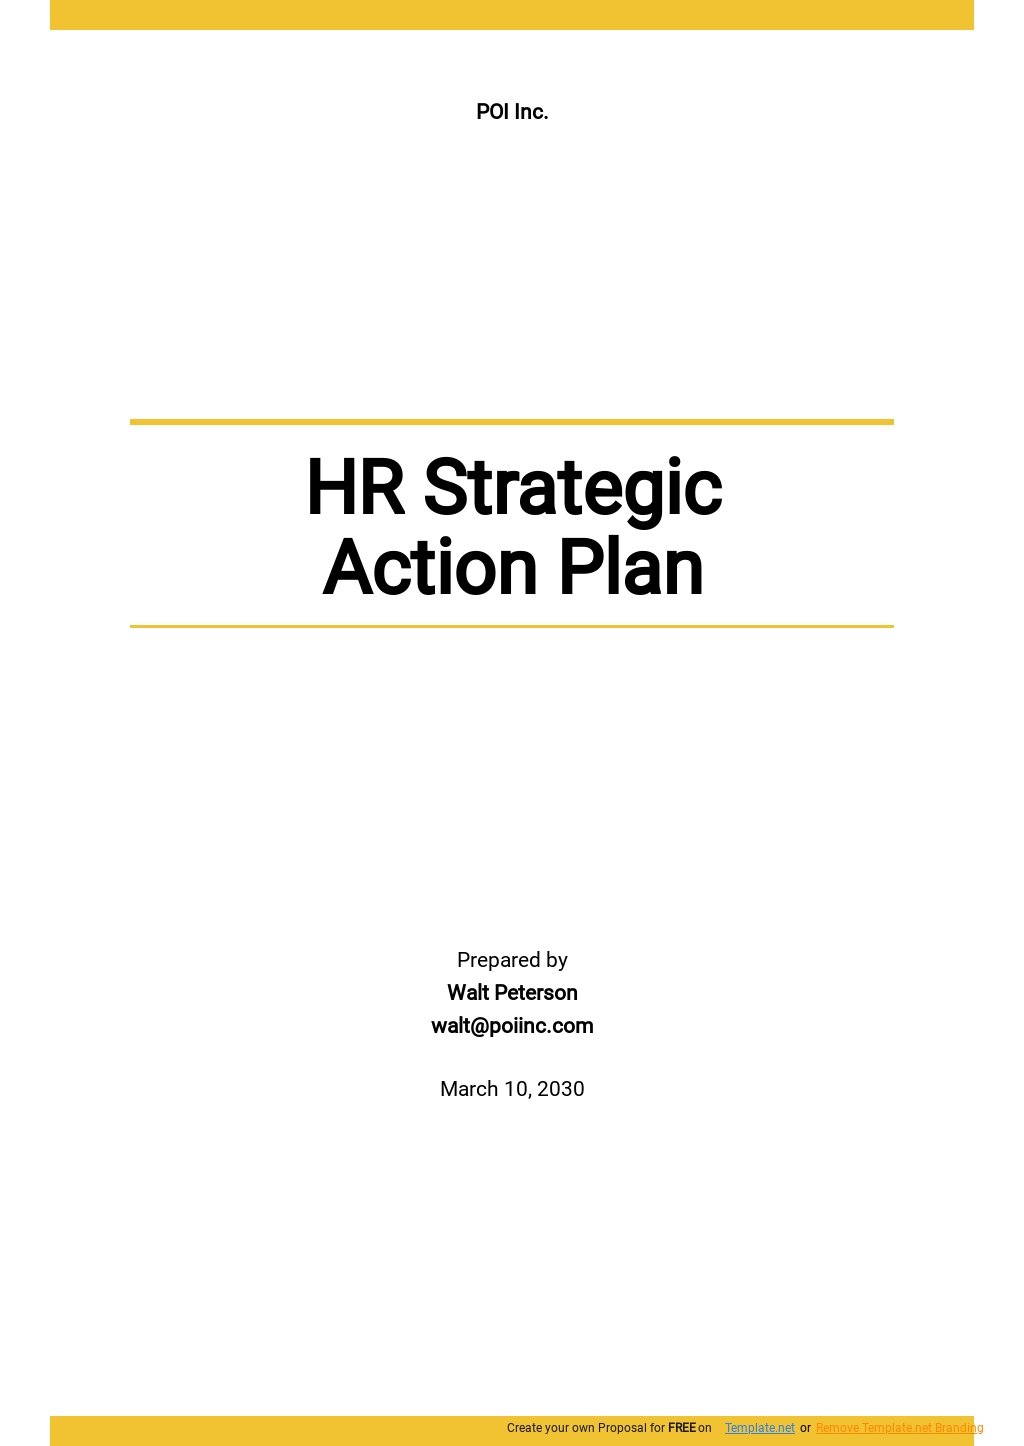 HR Strategic Action Plan Template